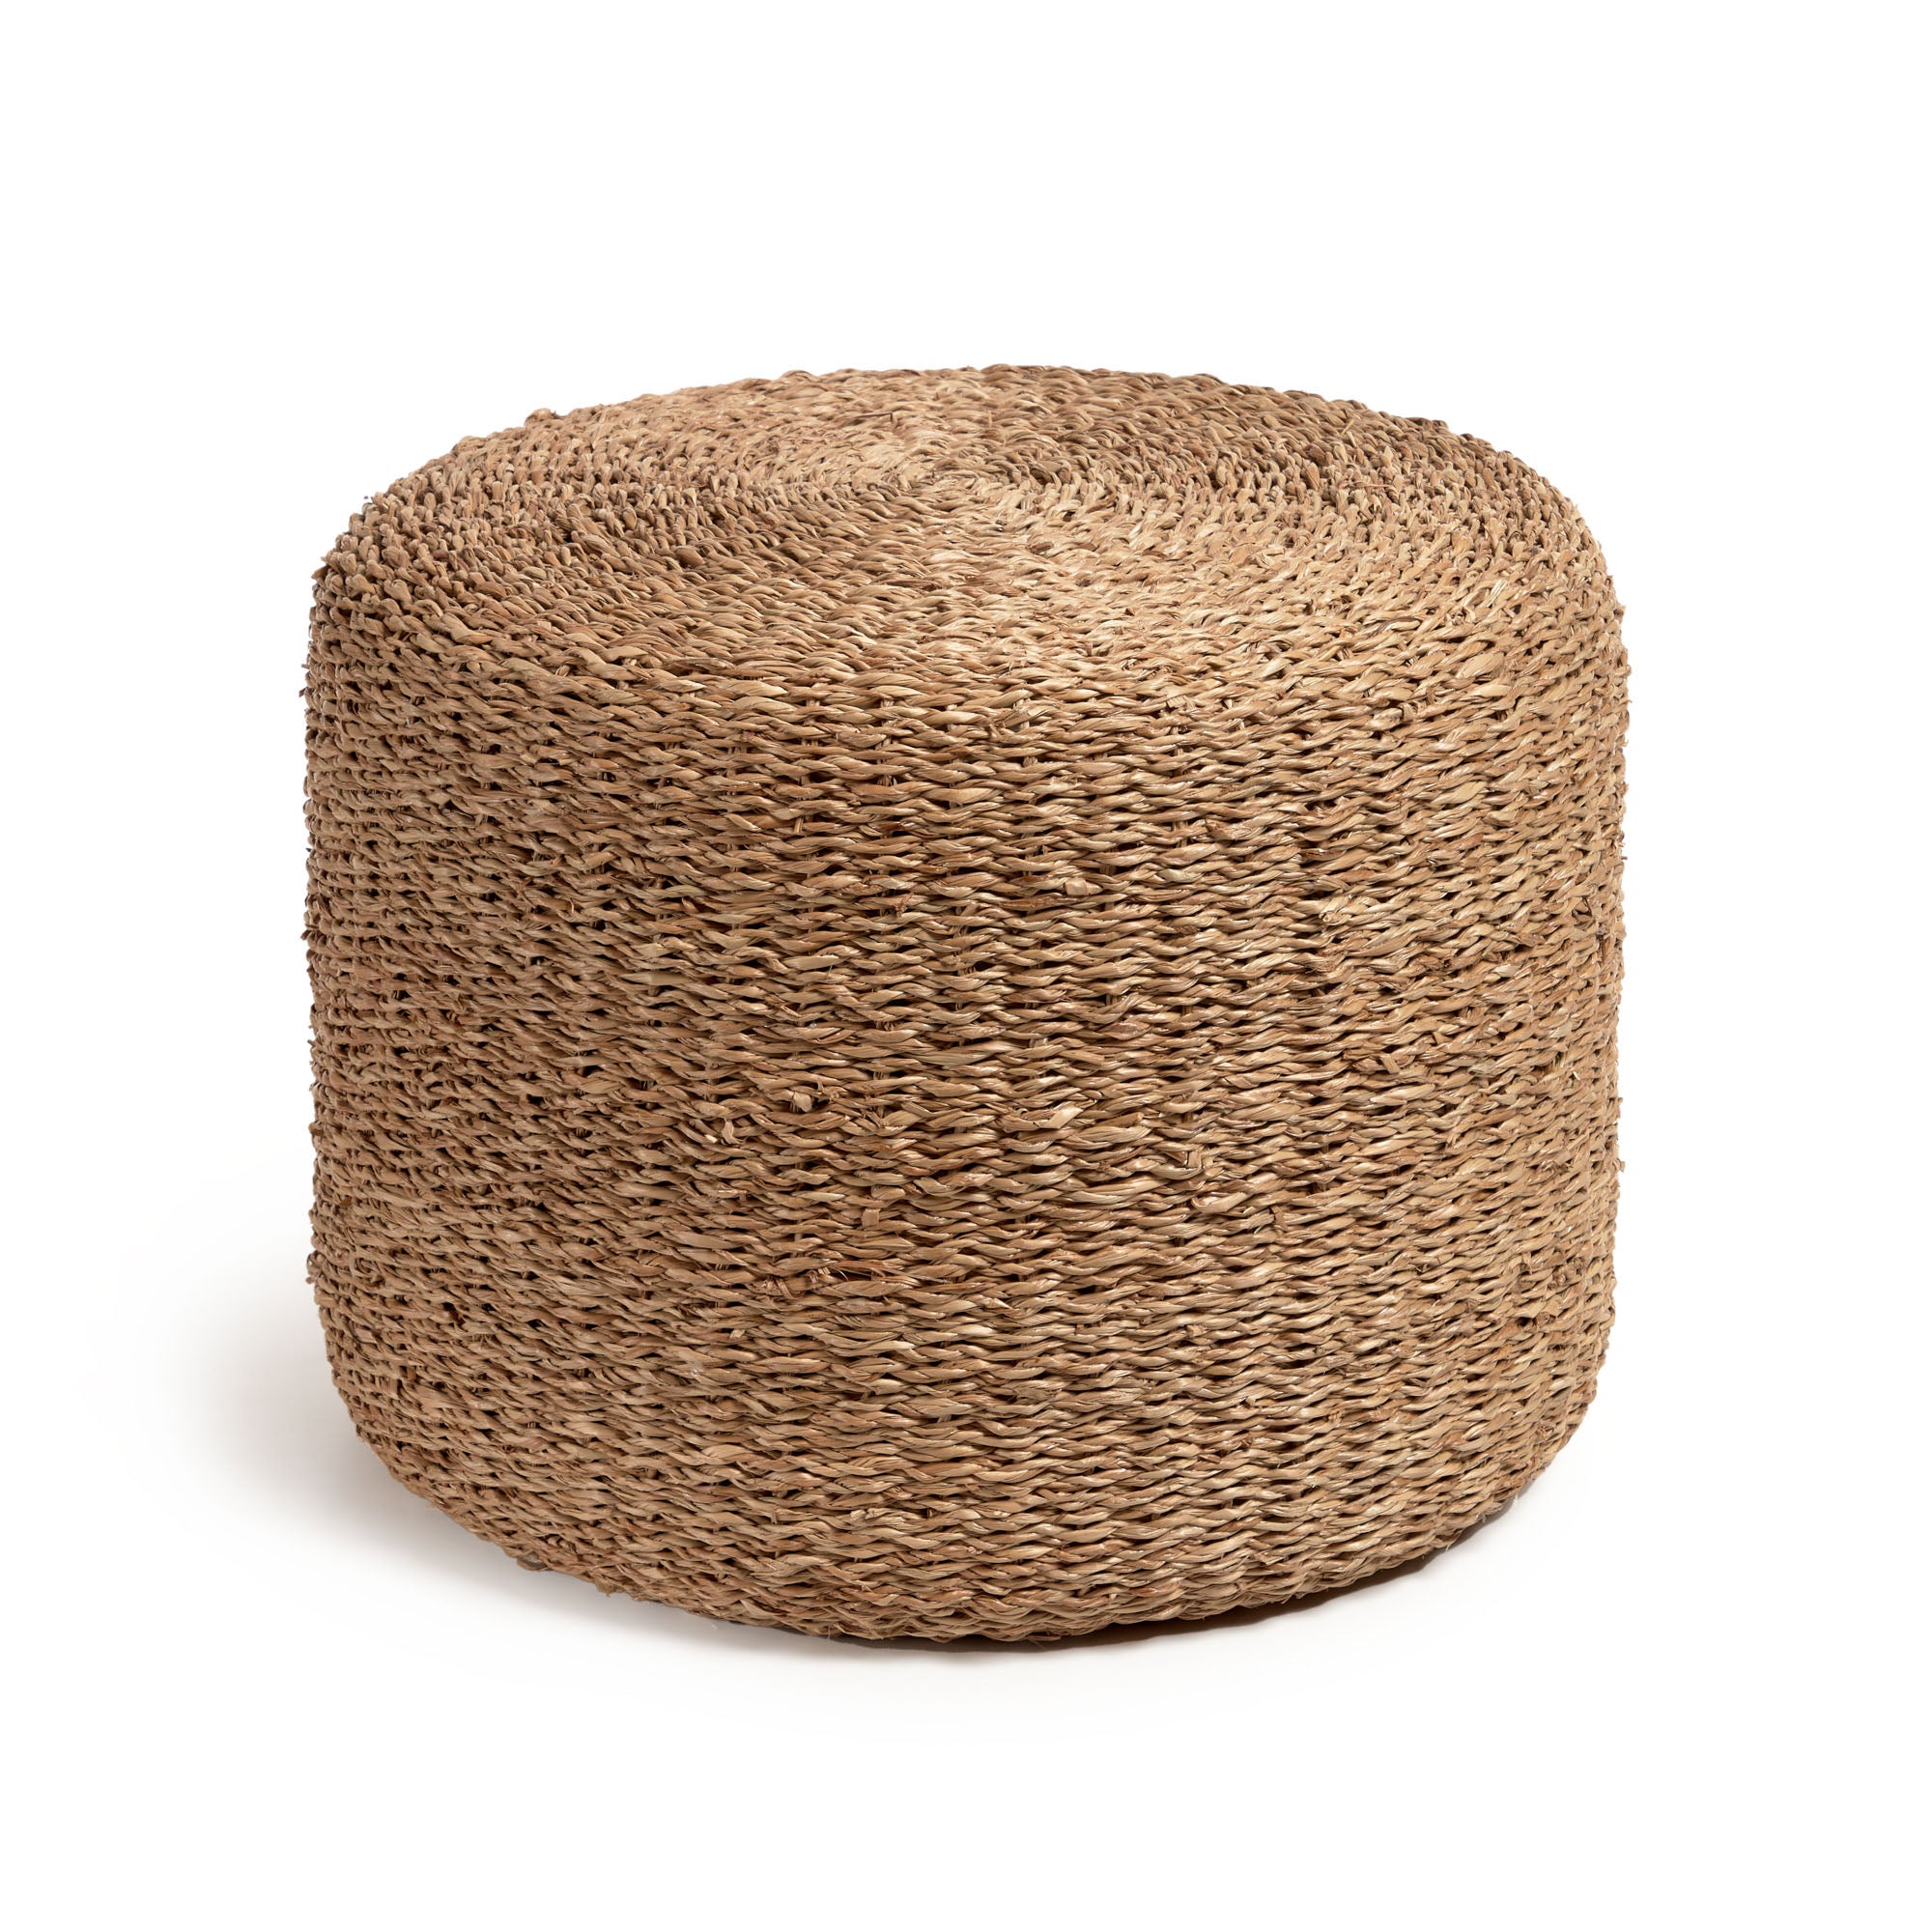 Someina natural fibre round footrest, Ø 40 cm